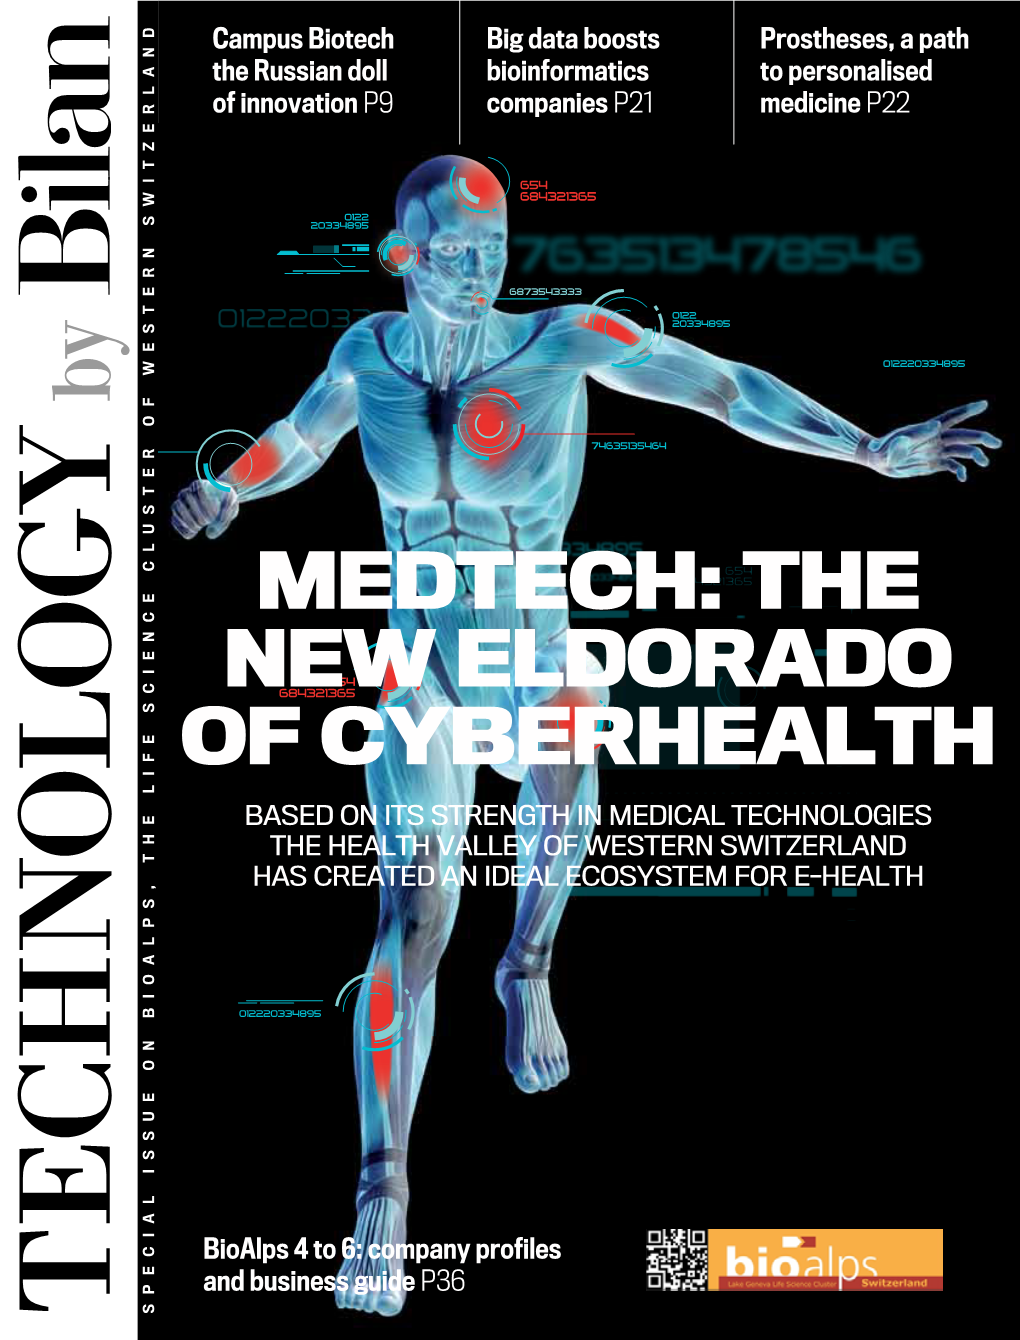 Medtech: the New Eldorado of Cyberhealth